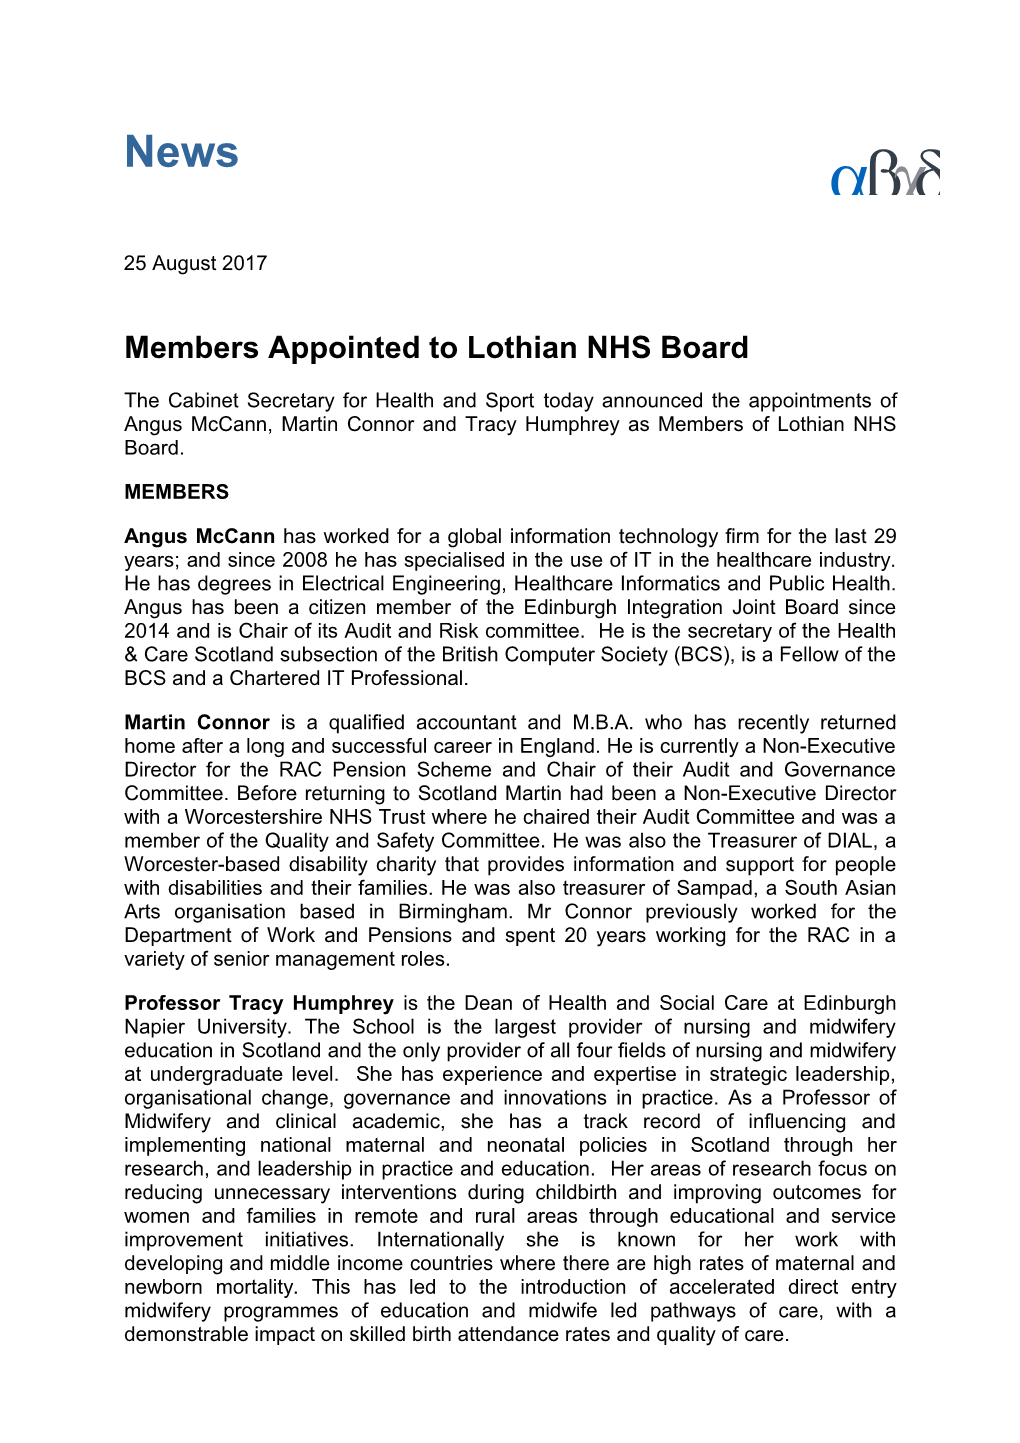 Membersappointed to Lothian NHS Board